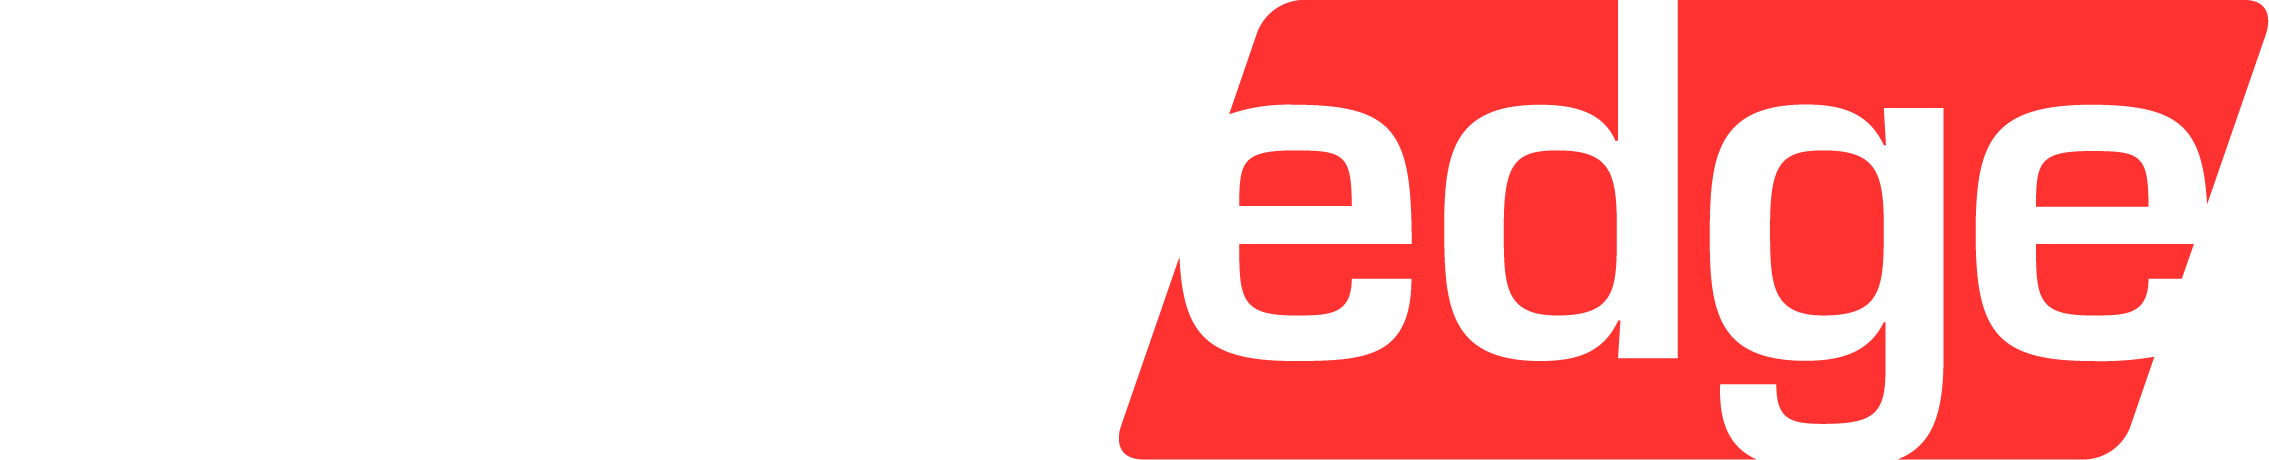 SEDG logo White-Red RGB@2x